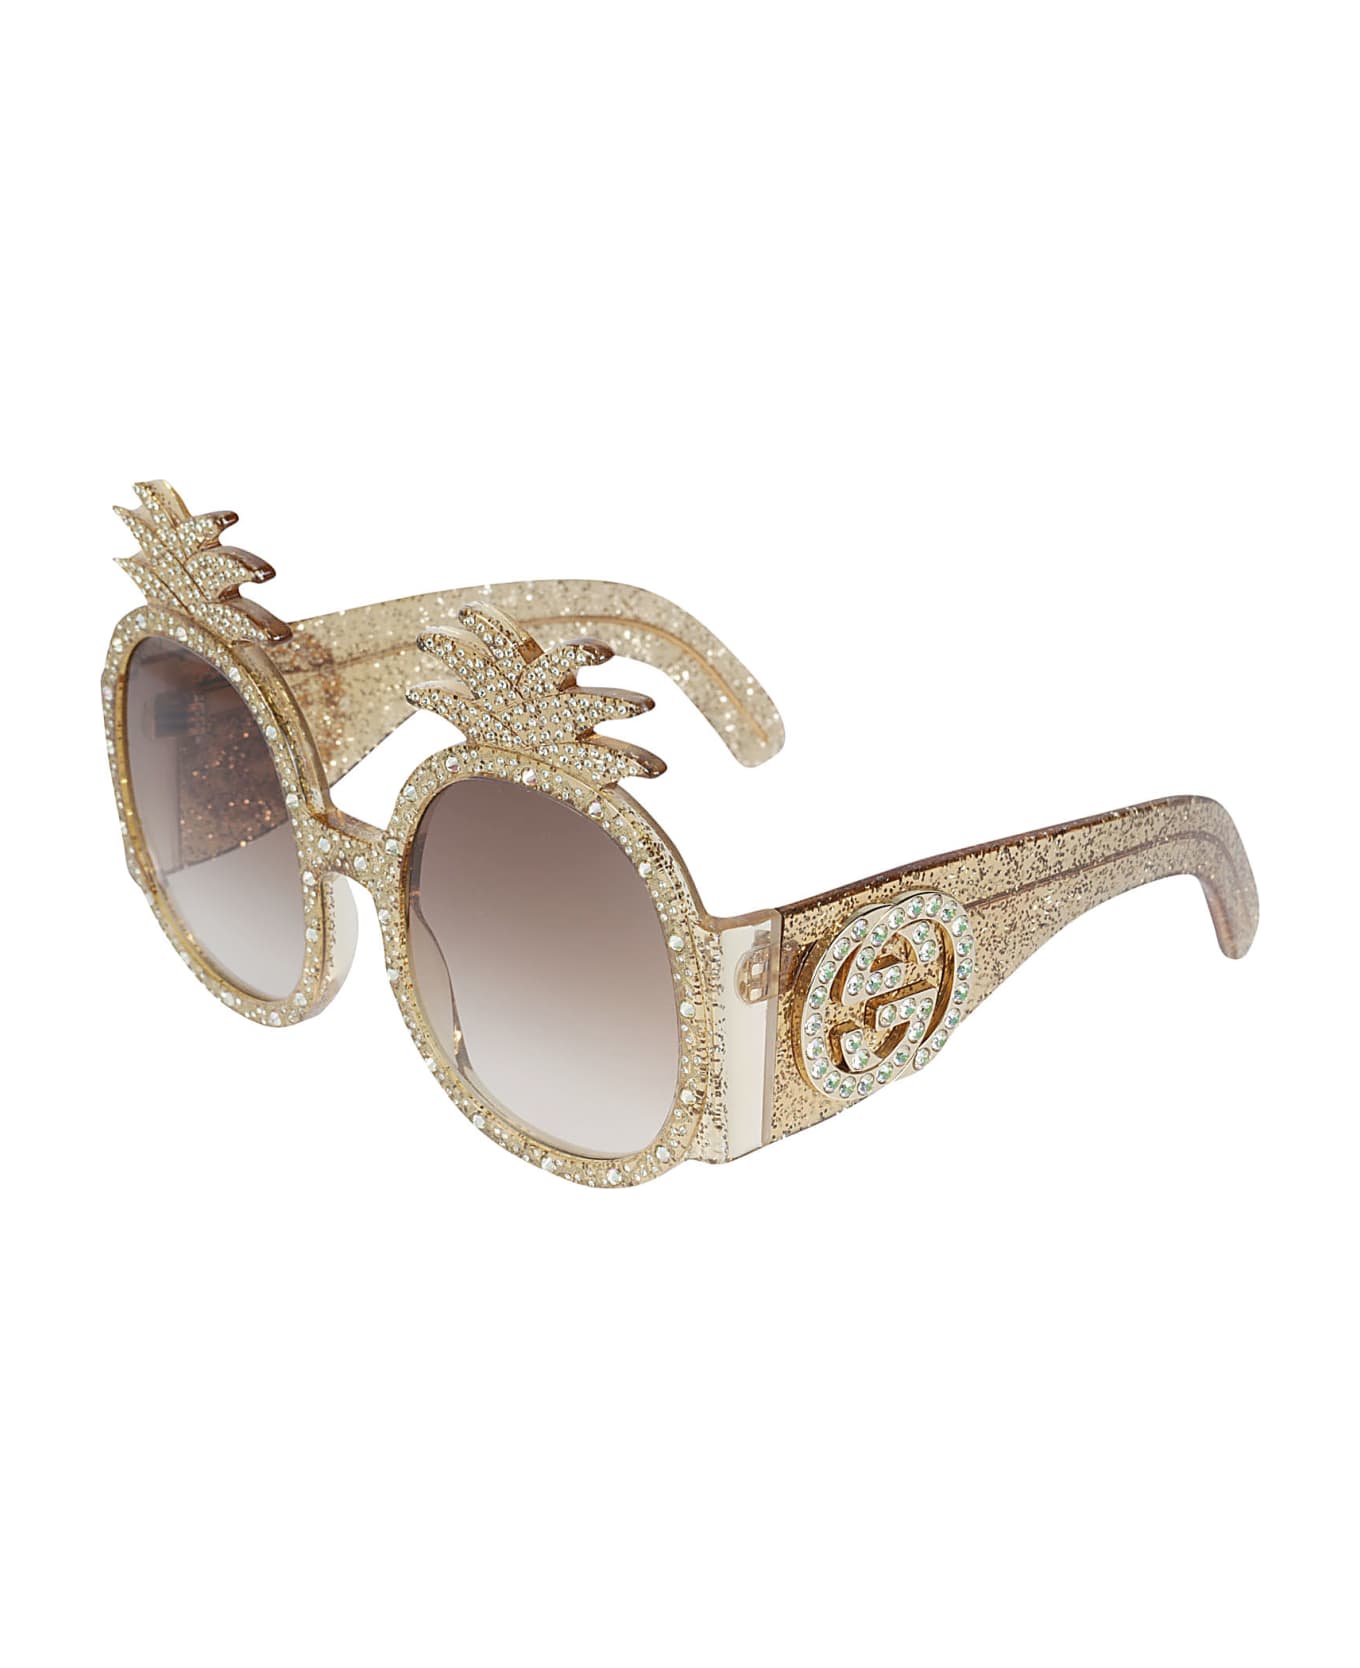 Gucci Eyewear Embellished Frame Sunglasses - 001 gold gold brown